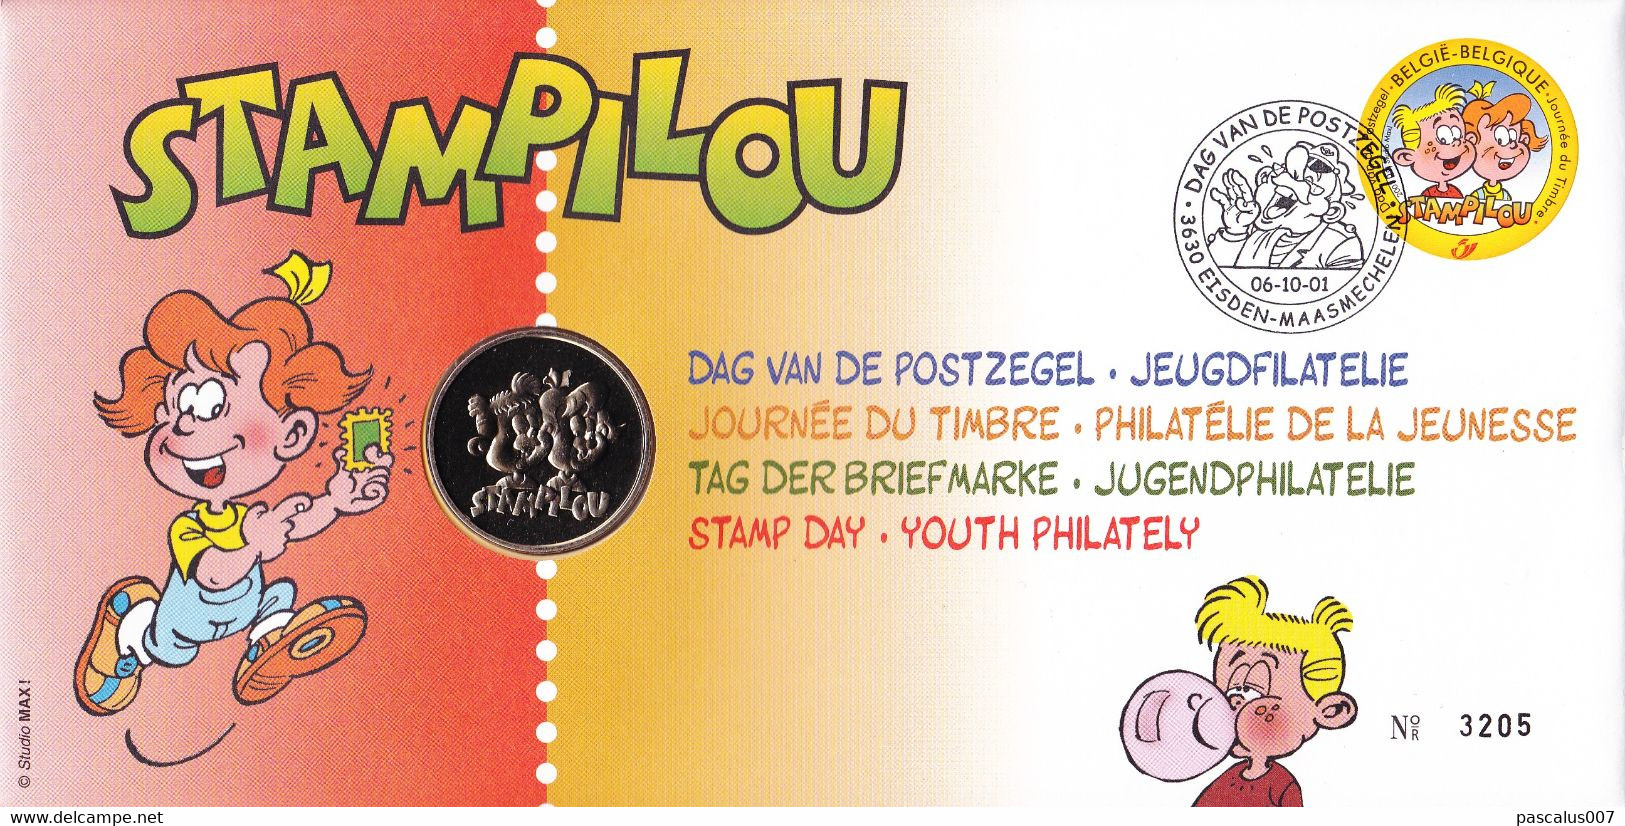 B01-232 3023  BD FDC Numisletter Rare Stam Et Pilou StamPilou 6-10-2001 3630 Eisden-Maasmechelen 20€ - Numisletter